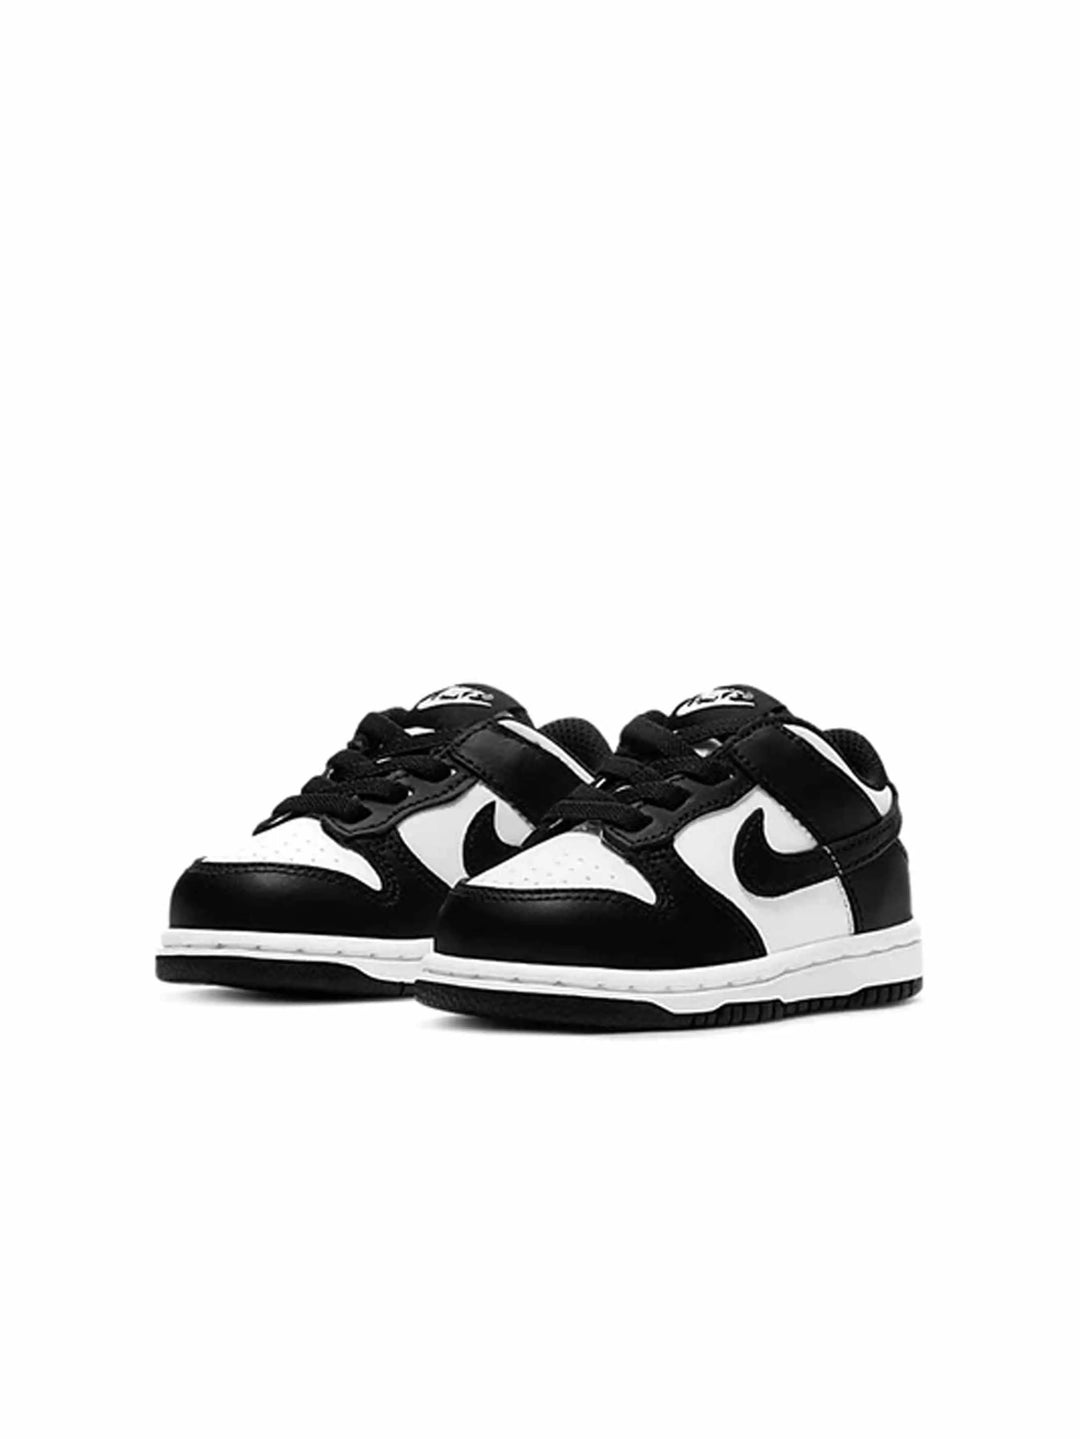 Nike Dunk Low Retro White Black Panda (2021) (TD) - Prior